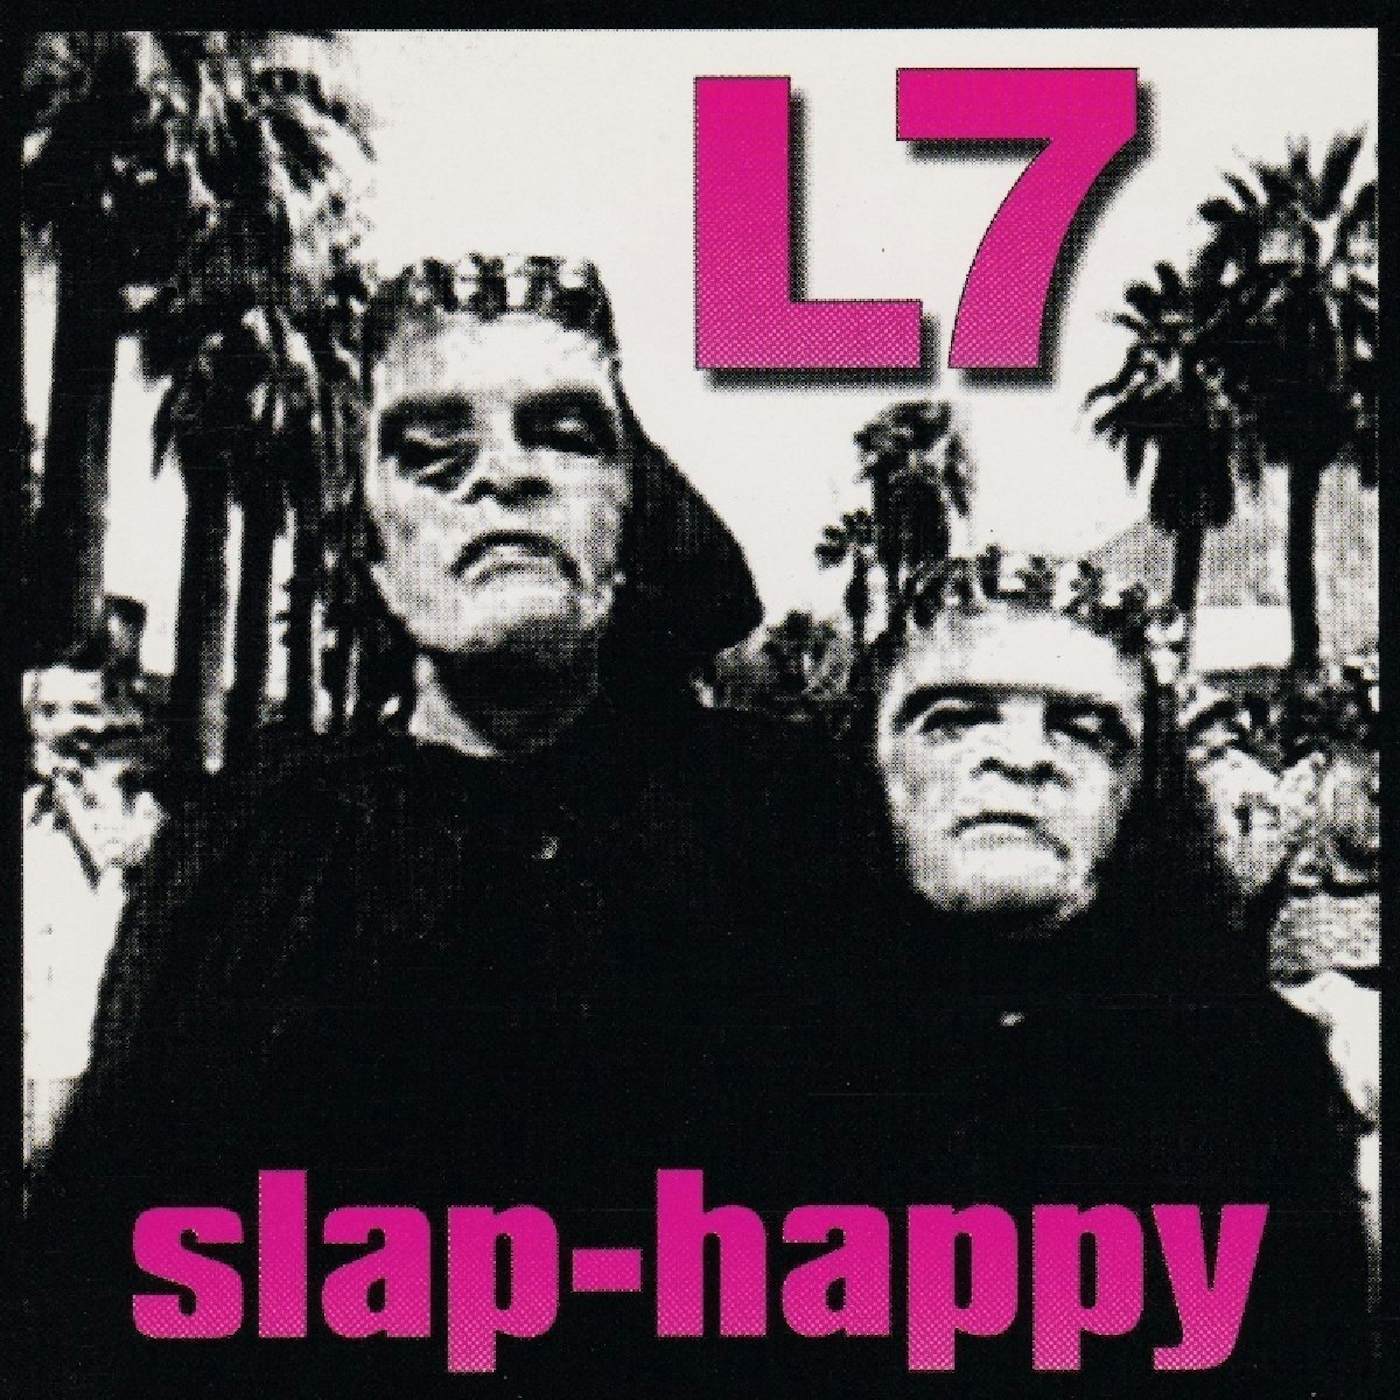 L7 Slap-Happy Vinyl Record